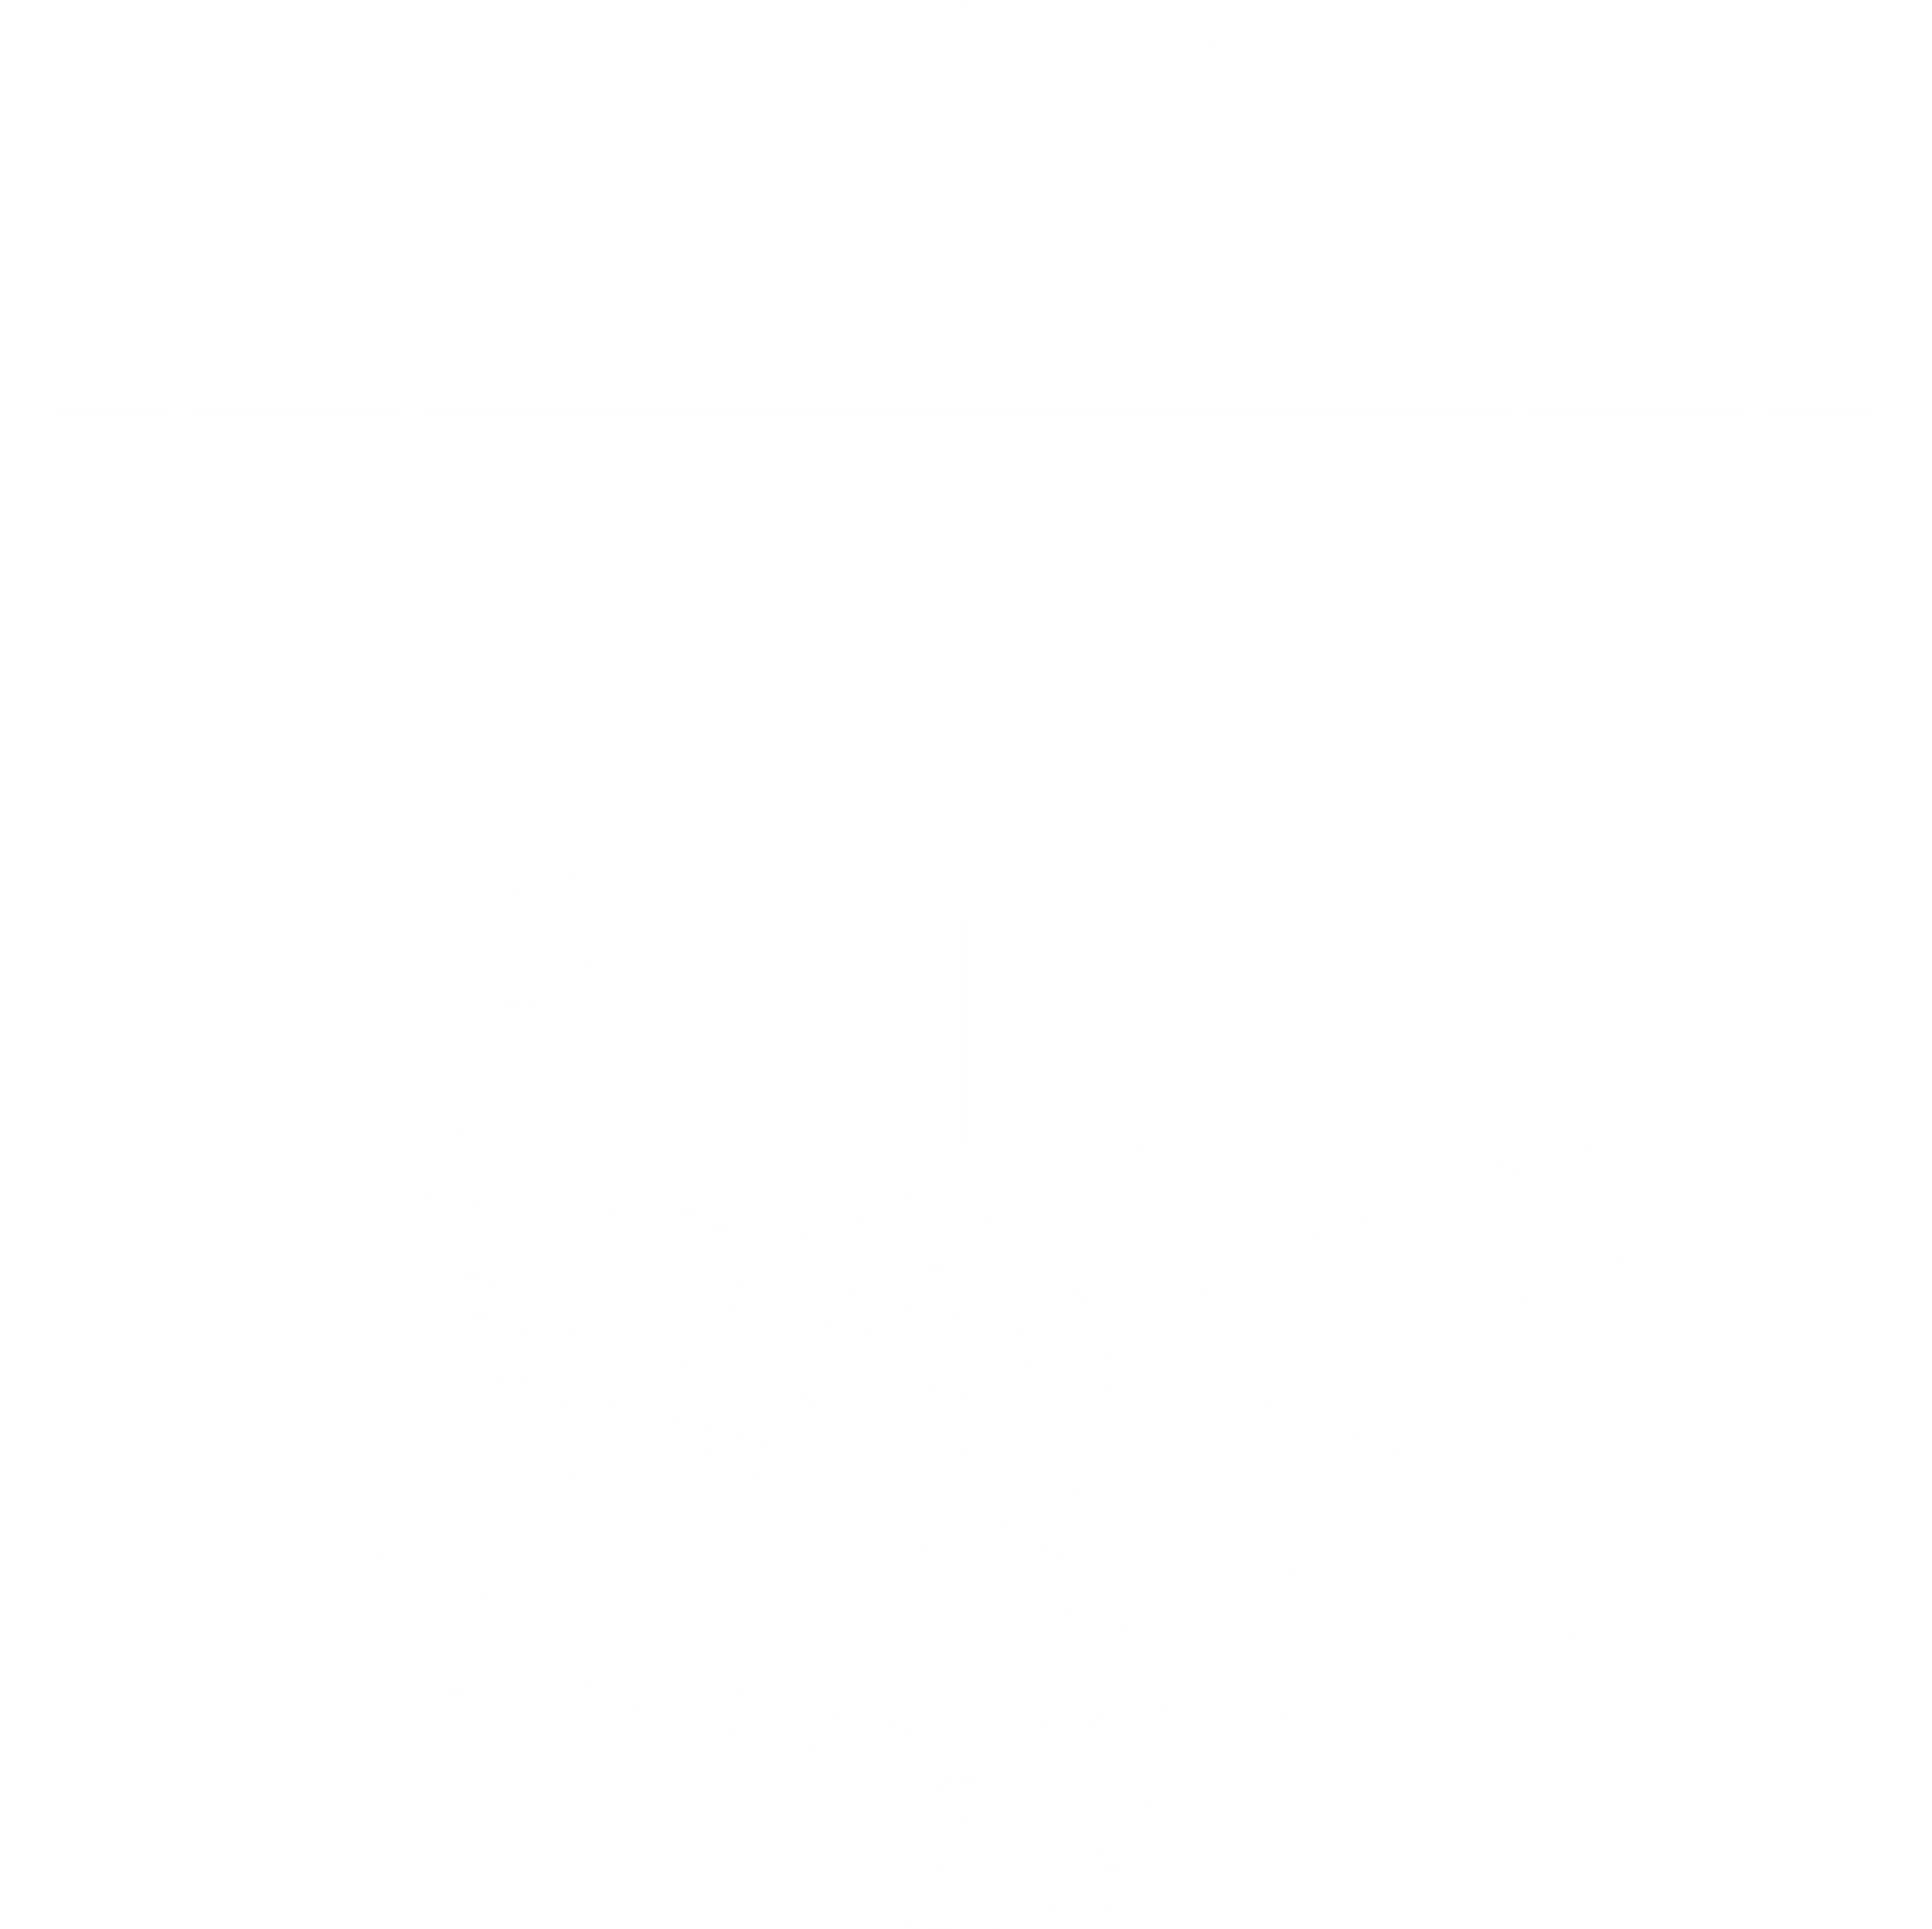 DiVine Wine Deliveries